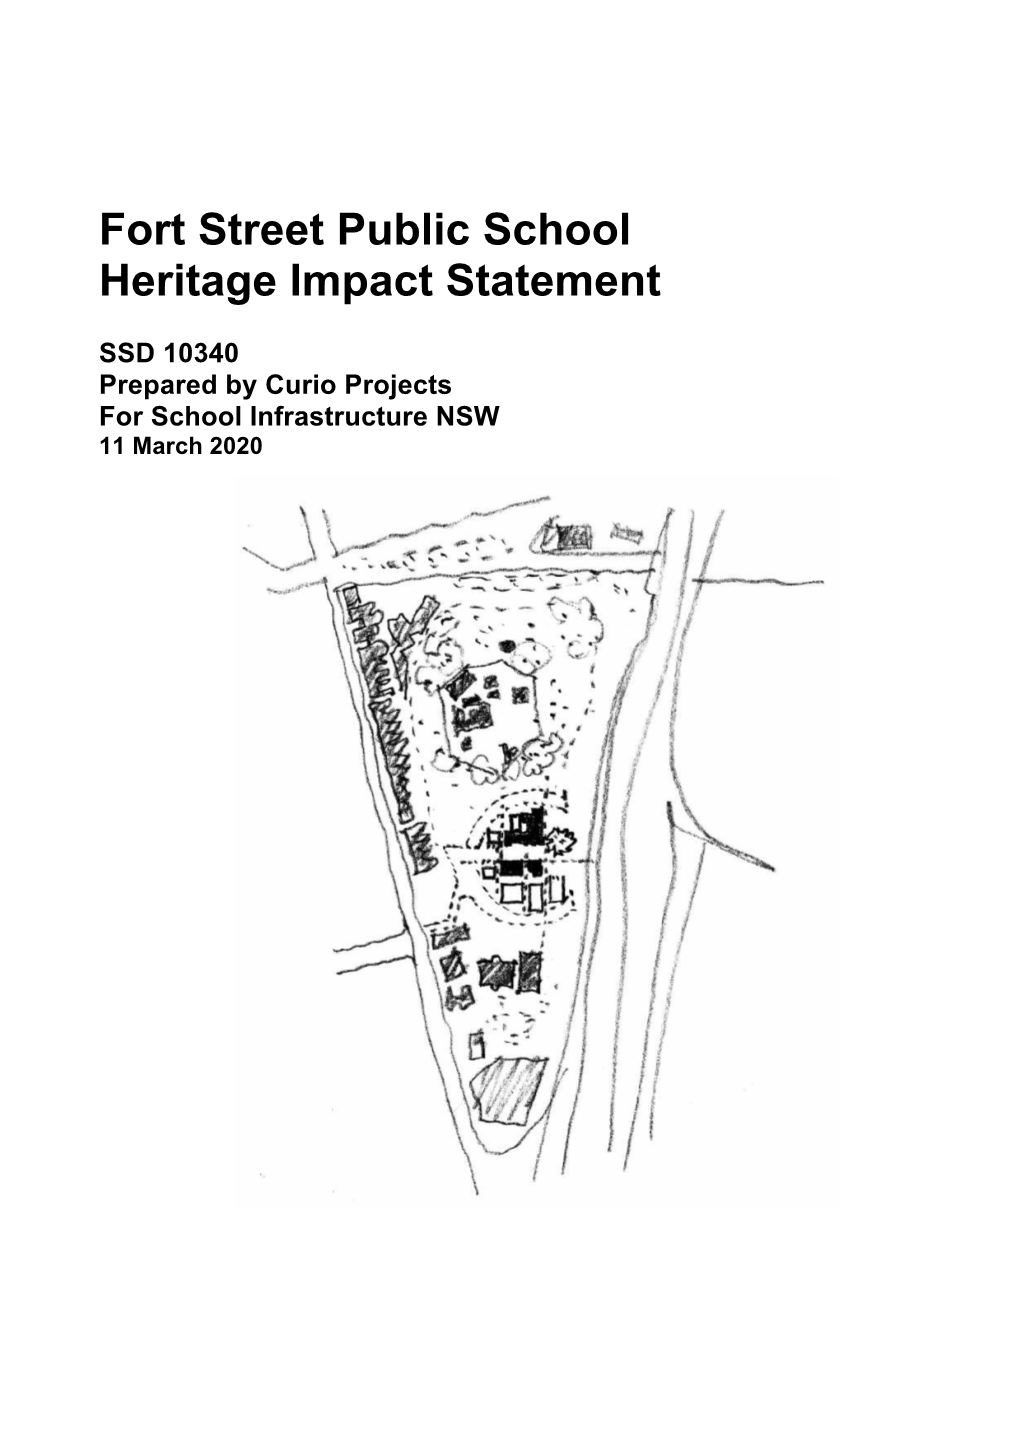 Fort Street Public School Heritage Impact Statement